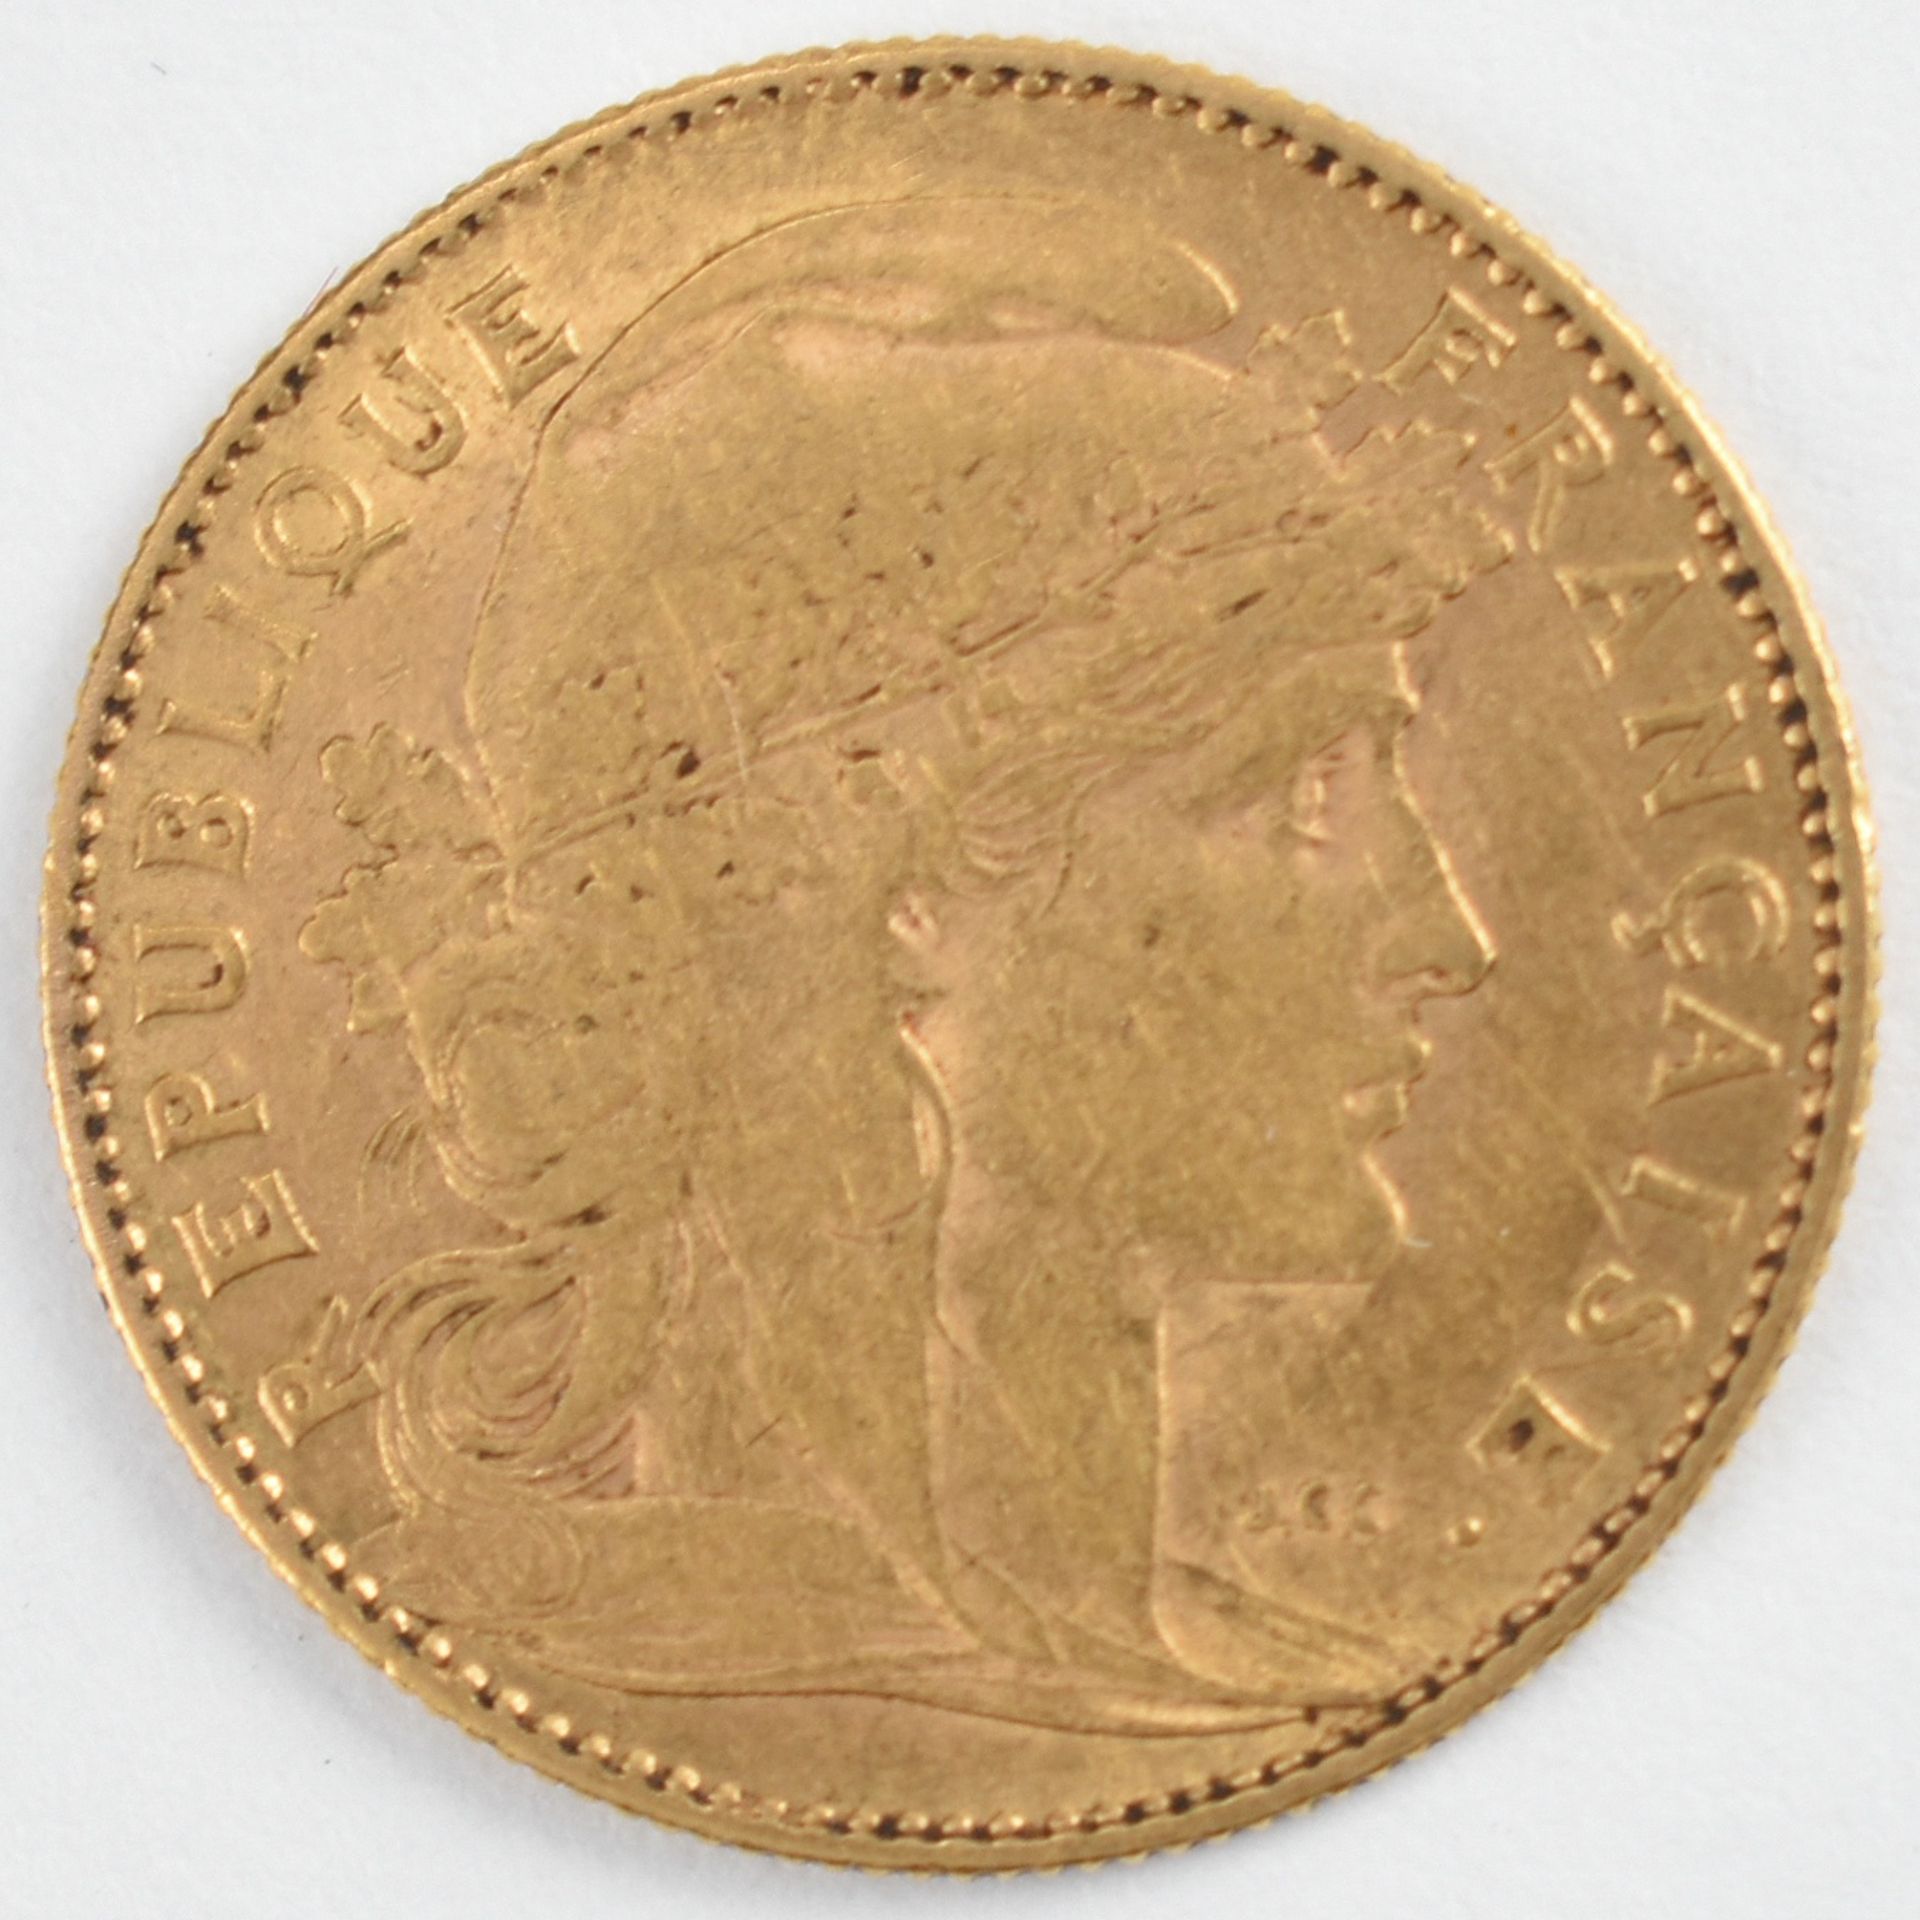 Goldmünze Frankreich 1900 10 Francs in Gold, 900/1000, 3,23 g, D ca. 18,9 mm, av. Marianne Kopf - Bild 3 aus 3